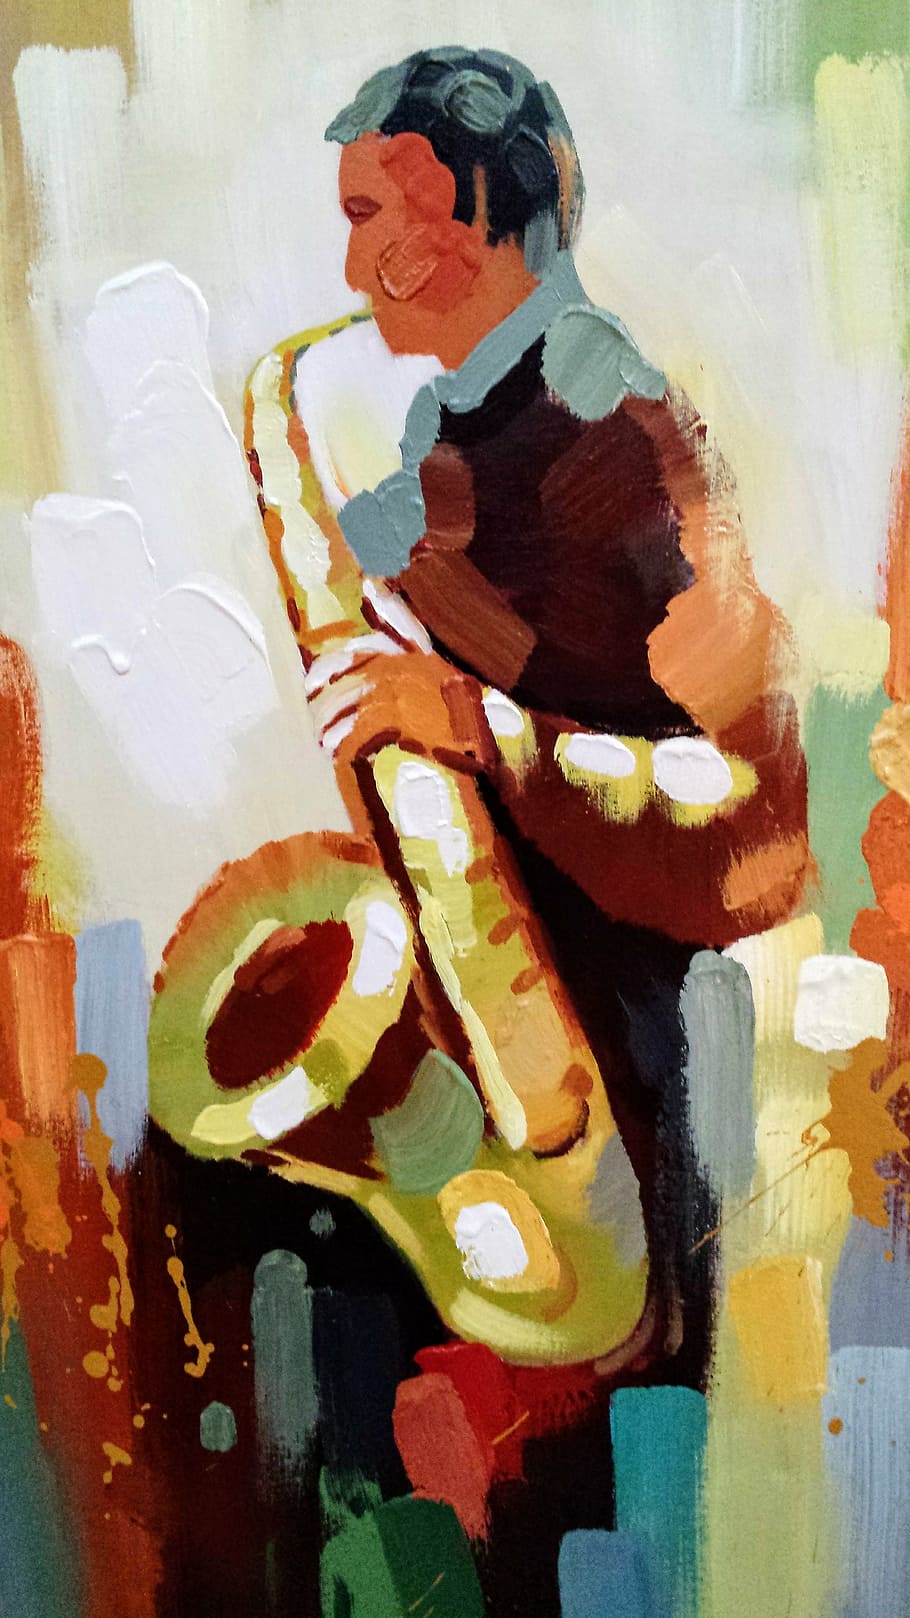 saxophone, painting, art, paint, colors, artistic, work of art, painter, artist, painted image